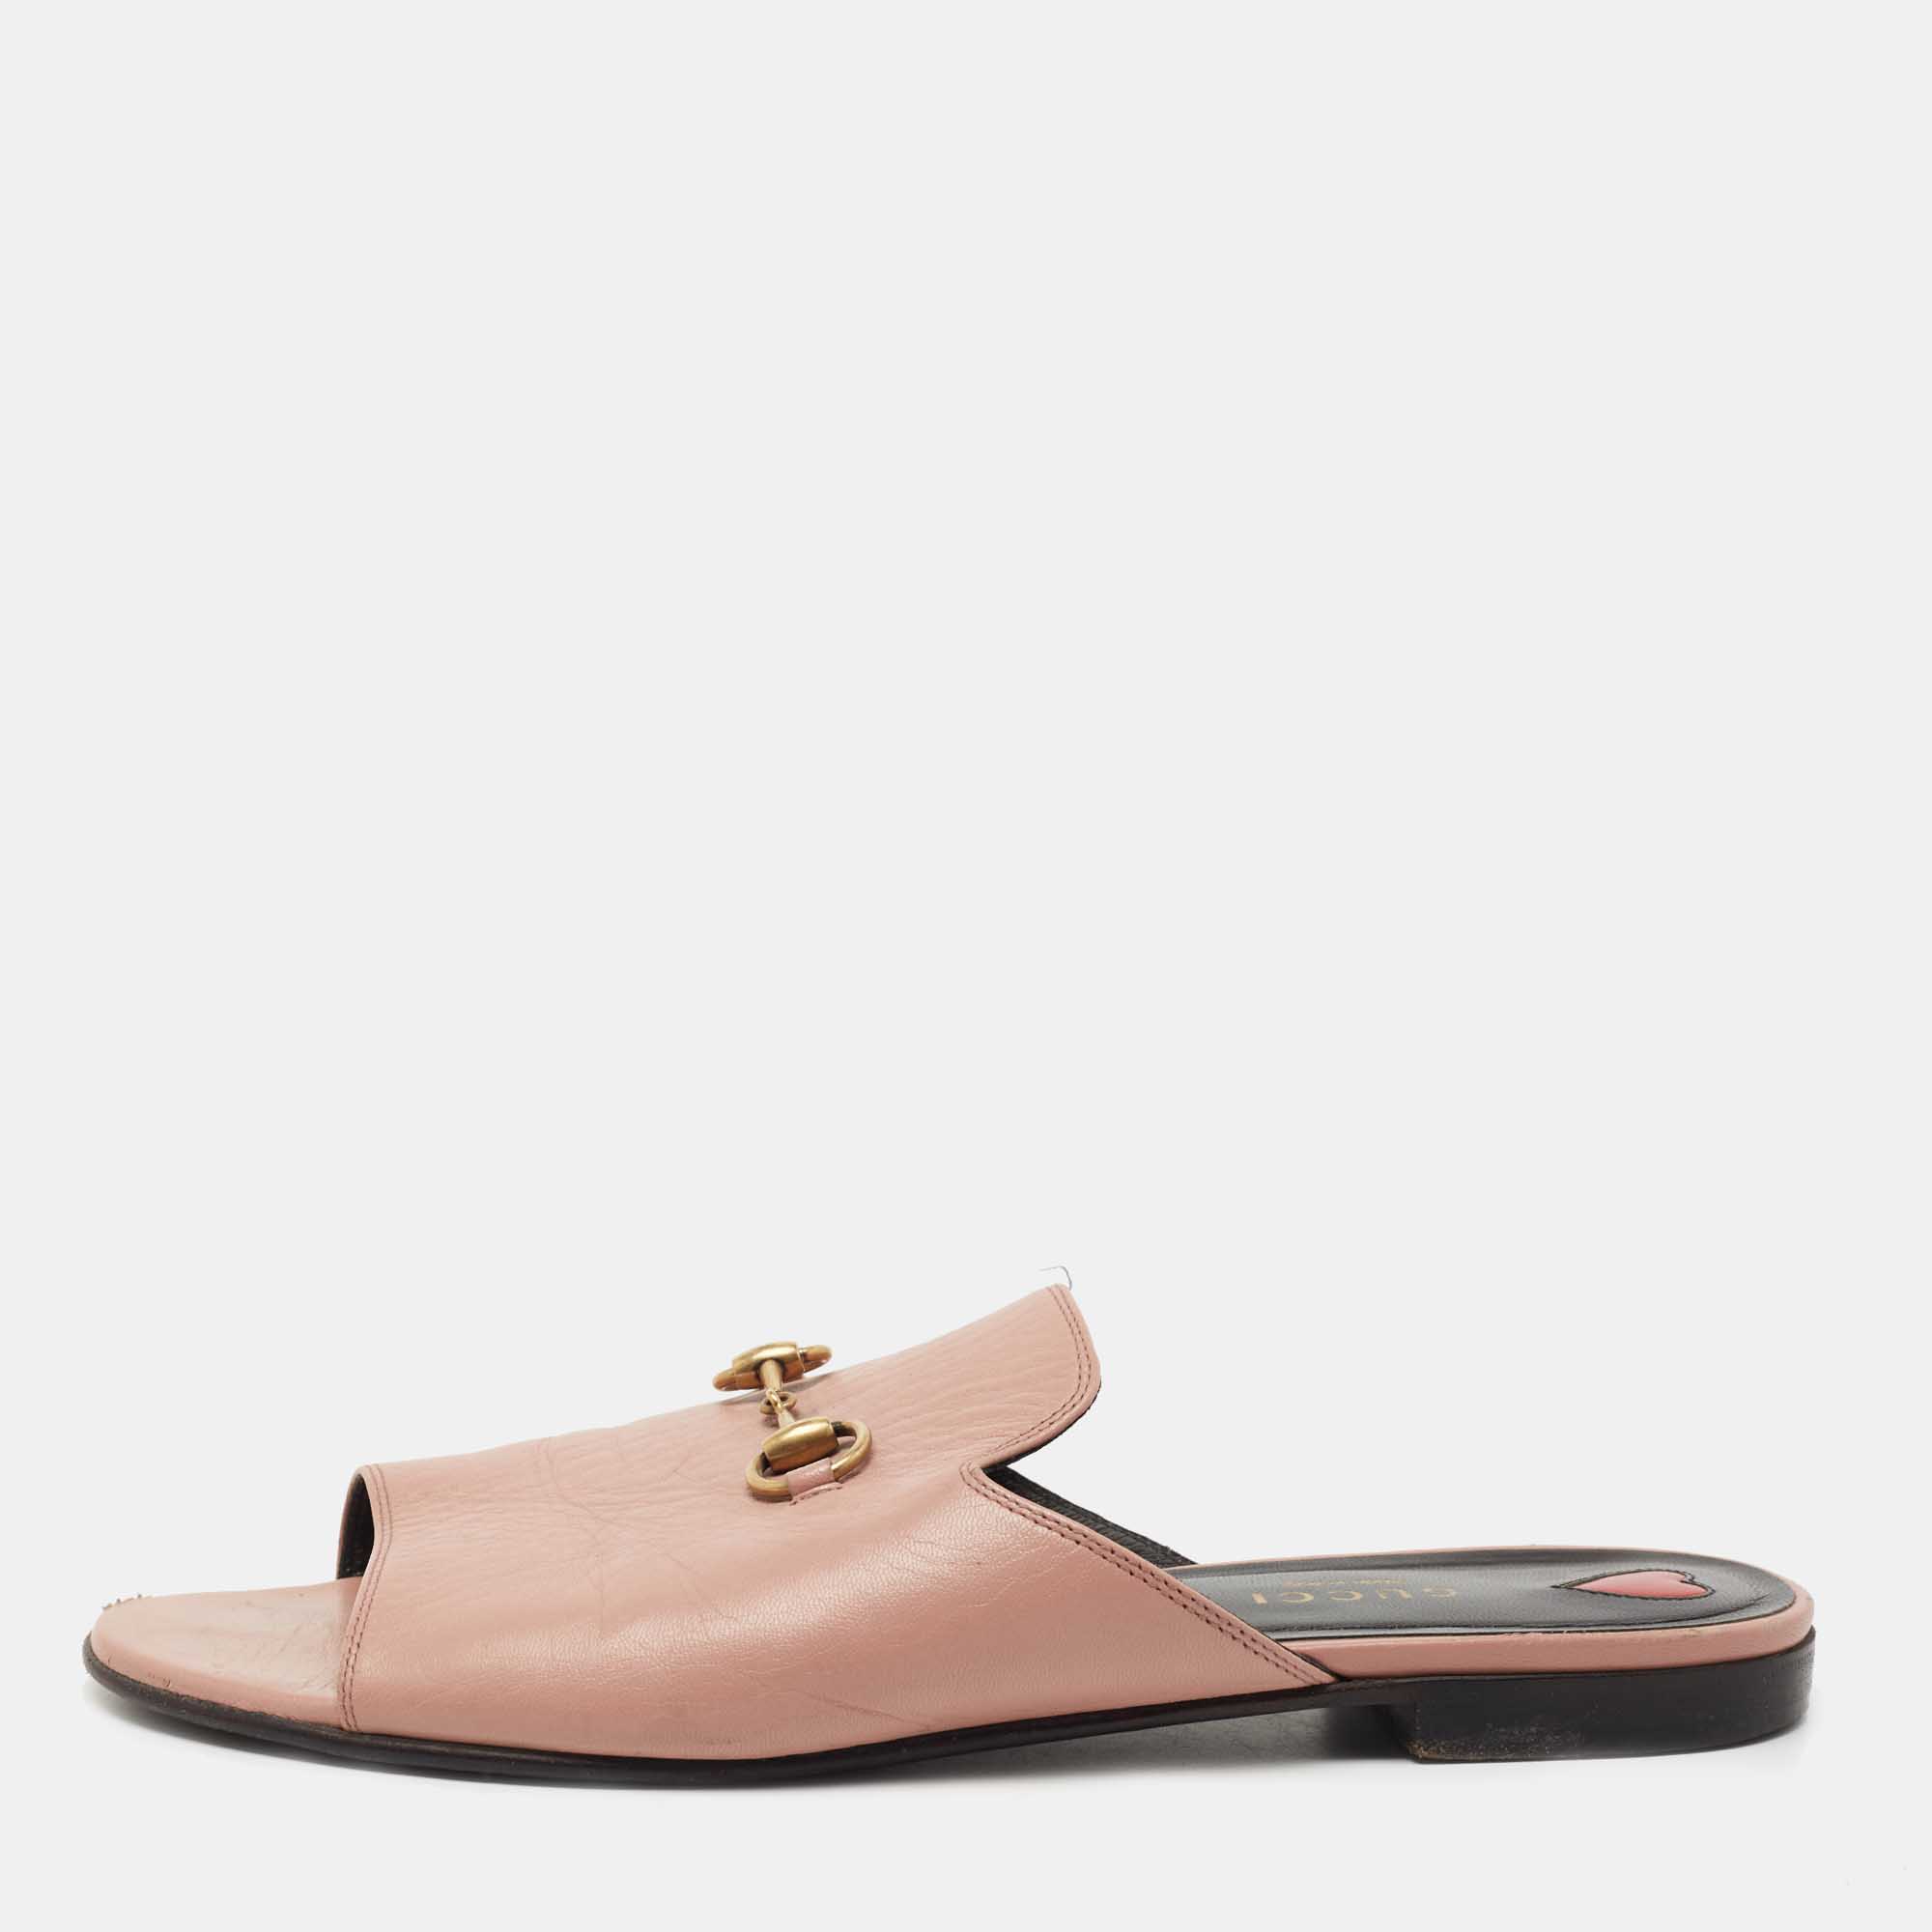 Gucci Pink Leather Malaga Horsebit Flat Slides Size 39 Gucci